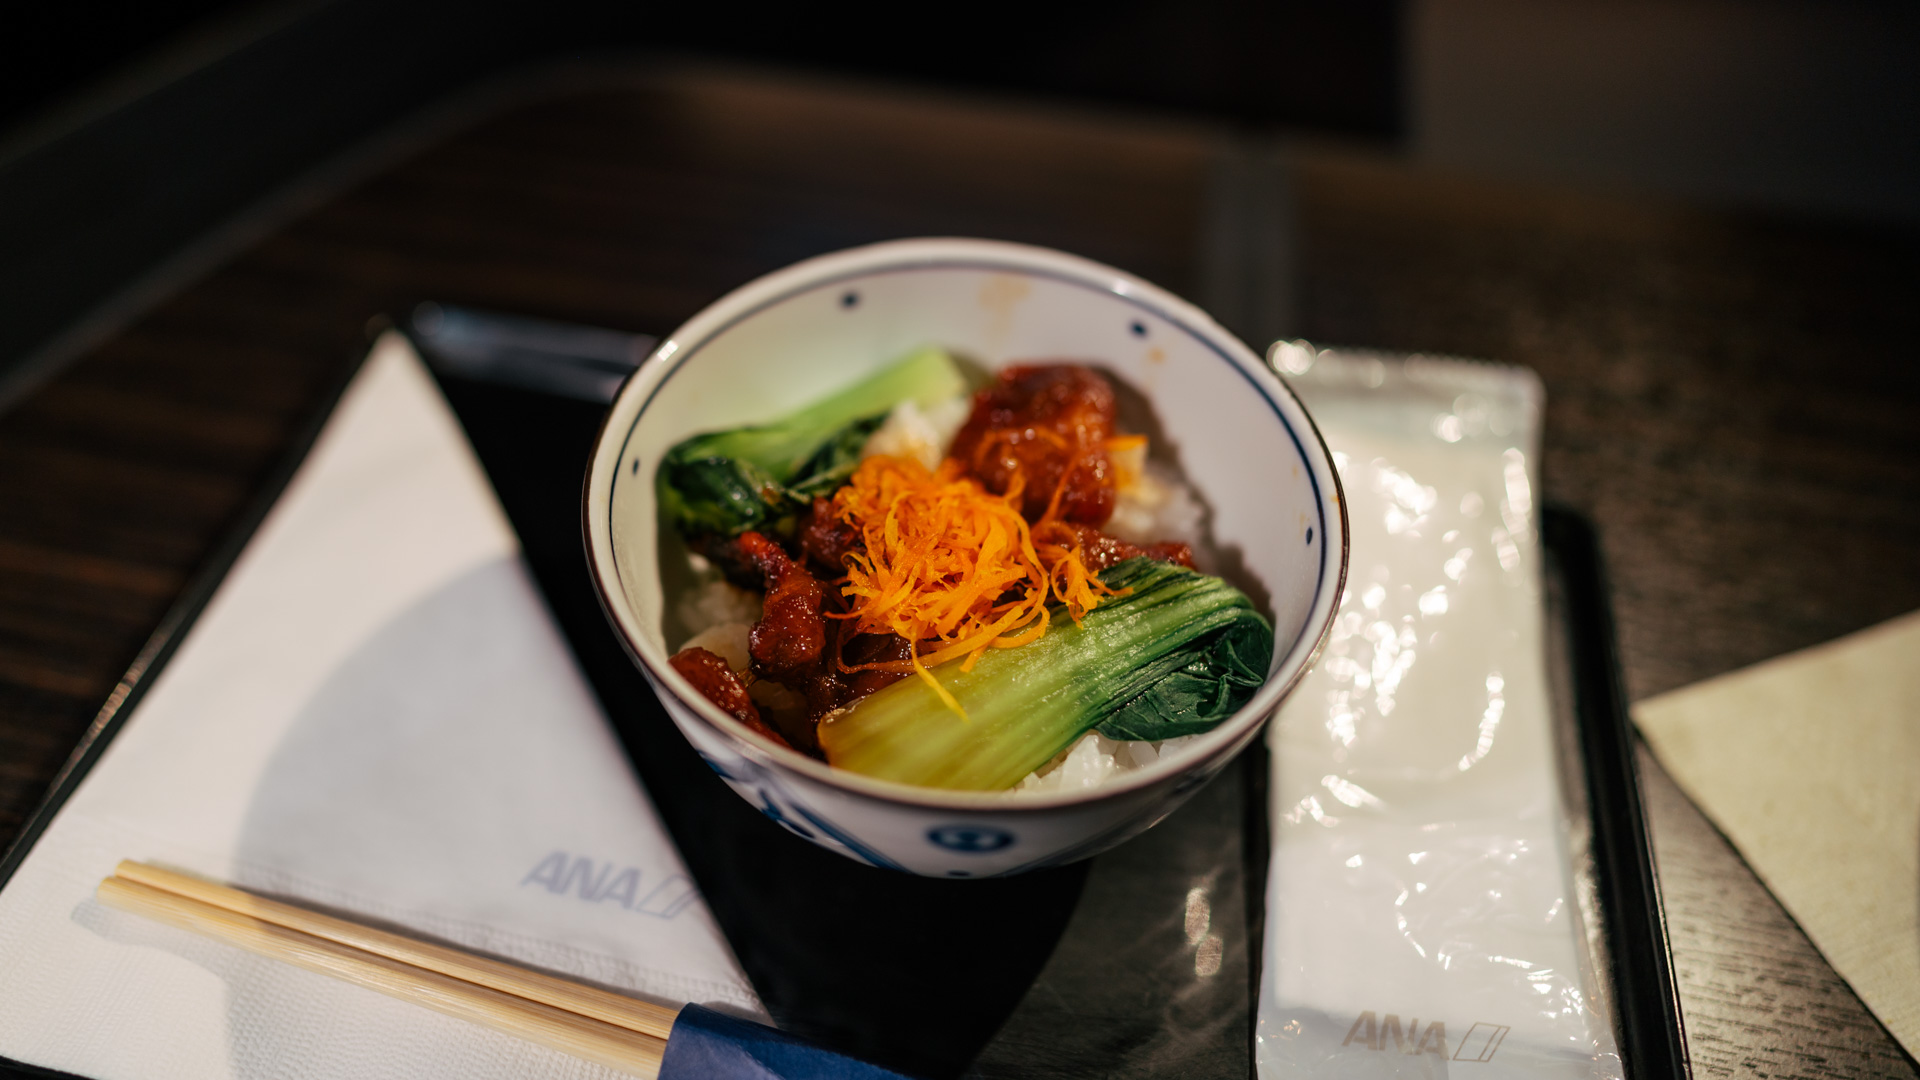 ANA Boeing 777 Business Class pork rice bowl